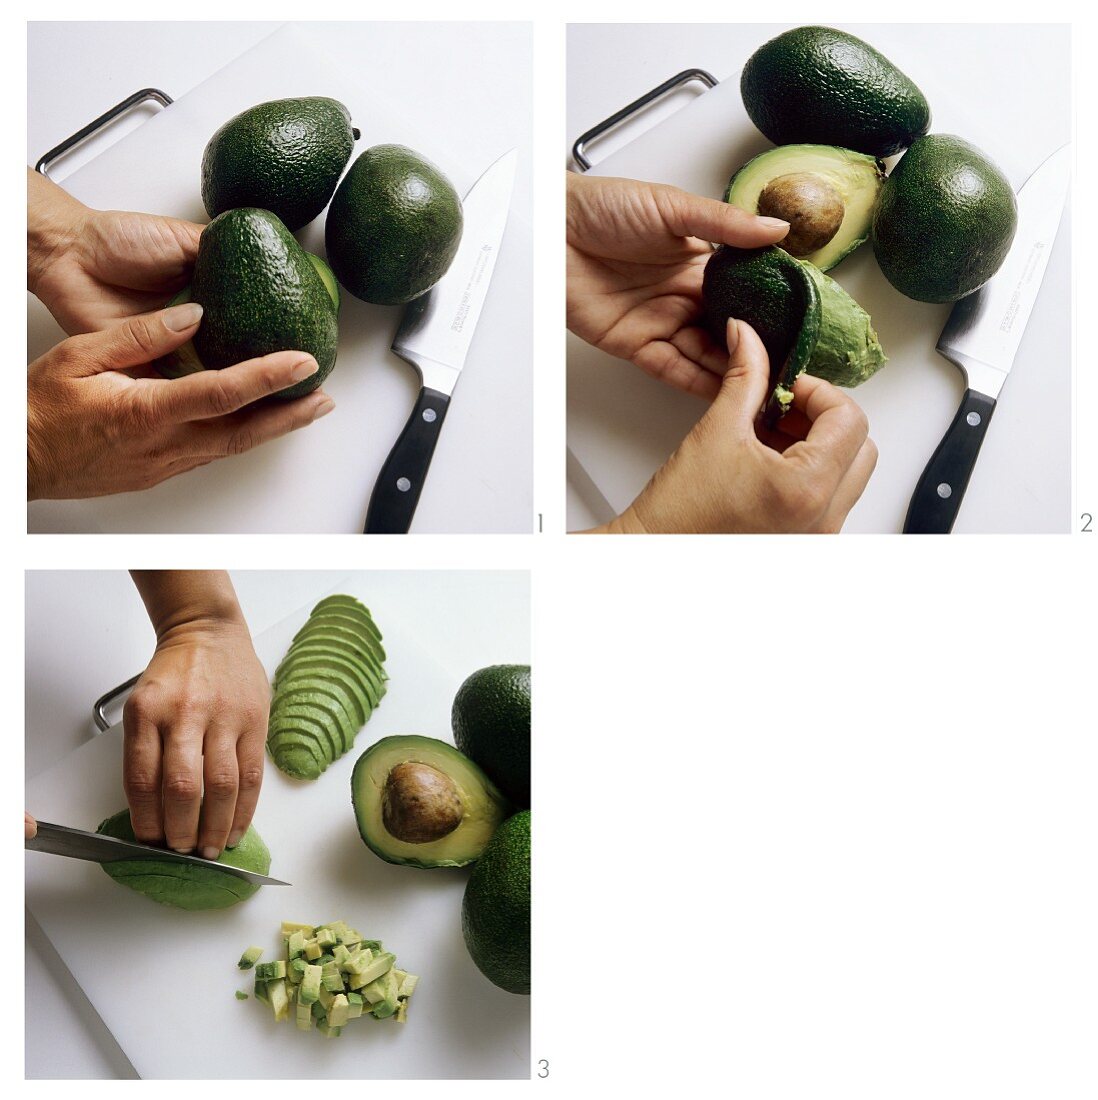 Steps in Preparation of Avocado